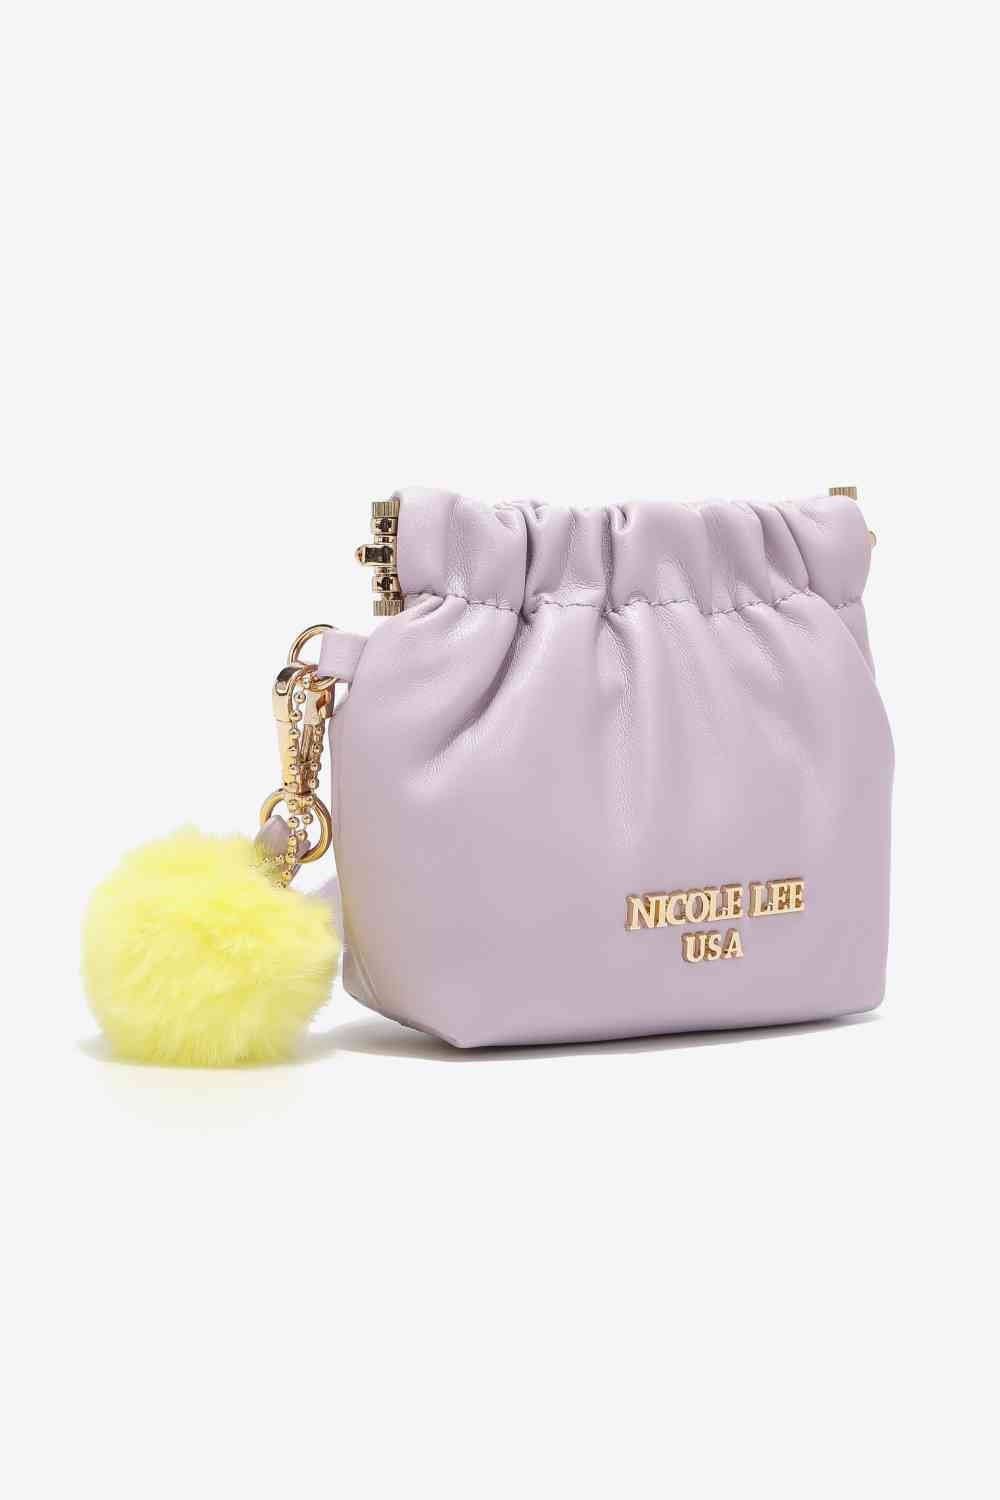 Lavender Nicole Lee USA Faux Leather Pouch Sentient Beauty Fashions Apparel &amp; Accessories